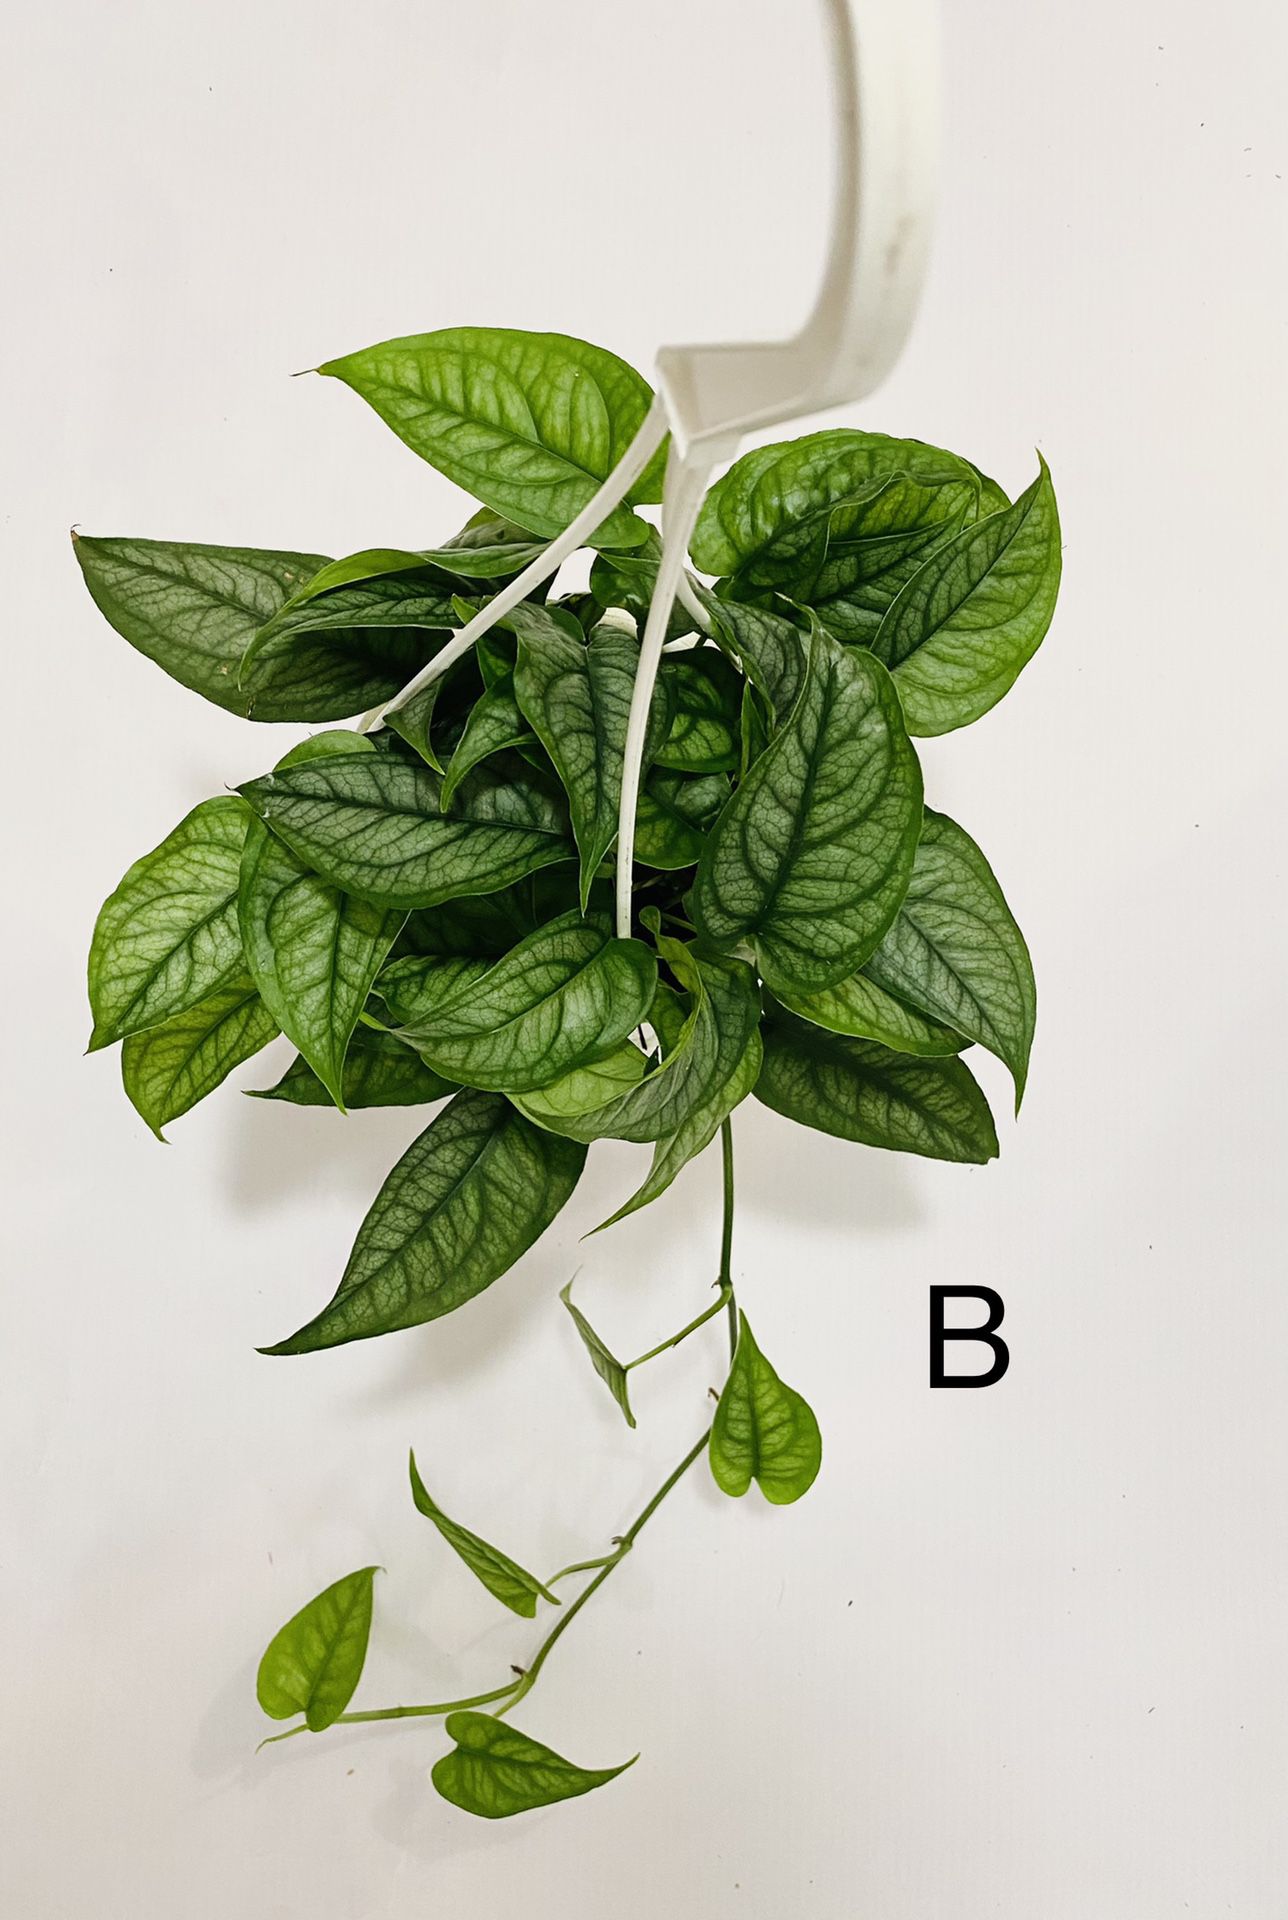 Monstera Siltepecana Plant 4.5” Hanging Pot 